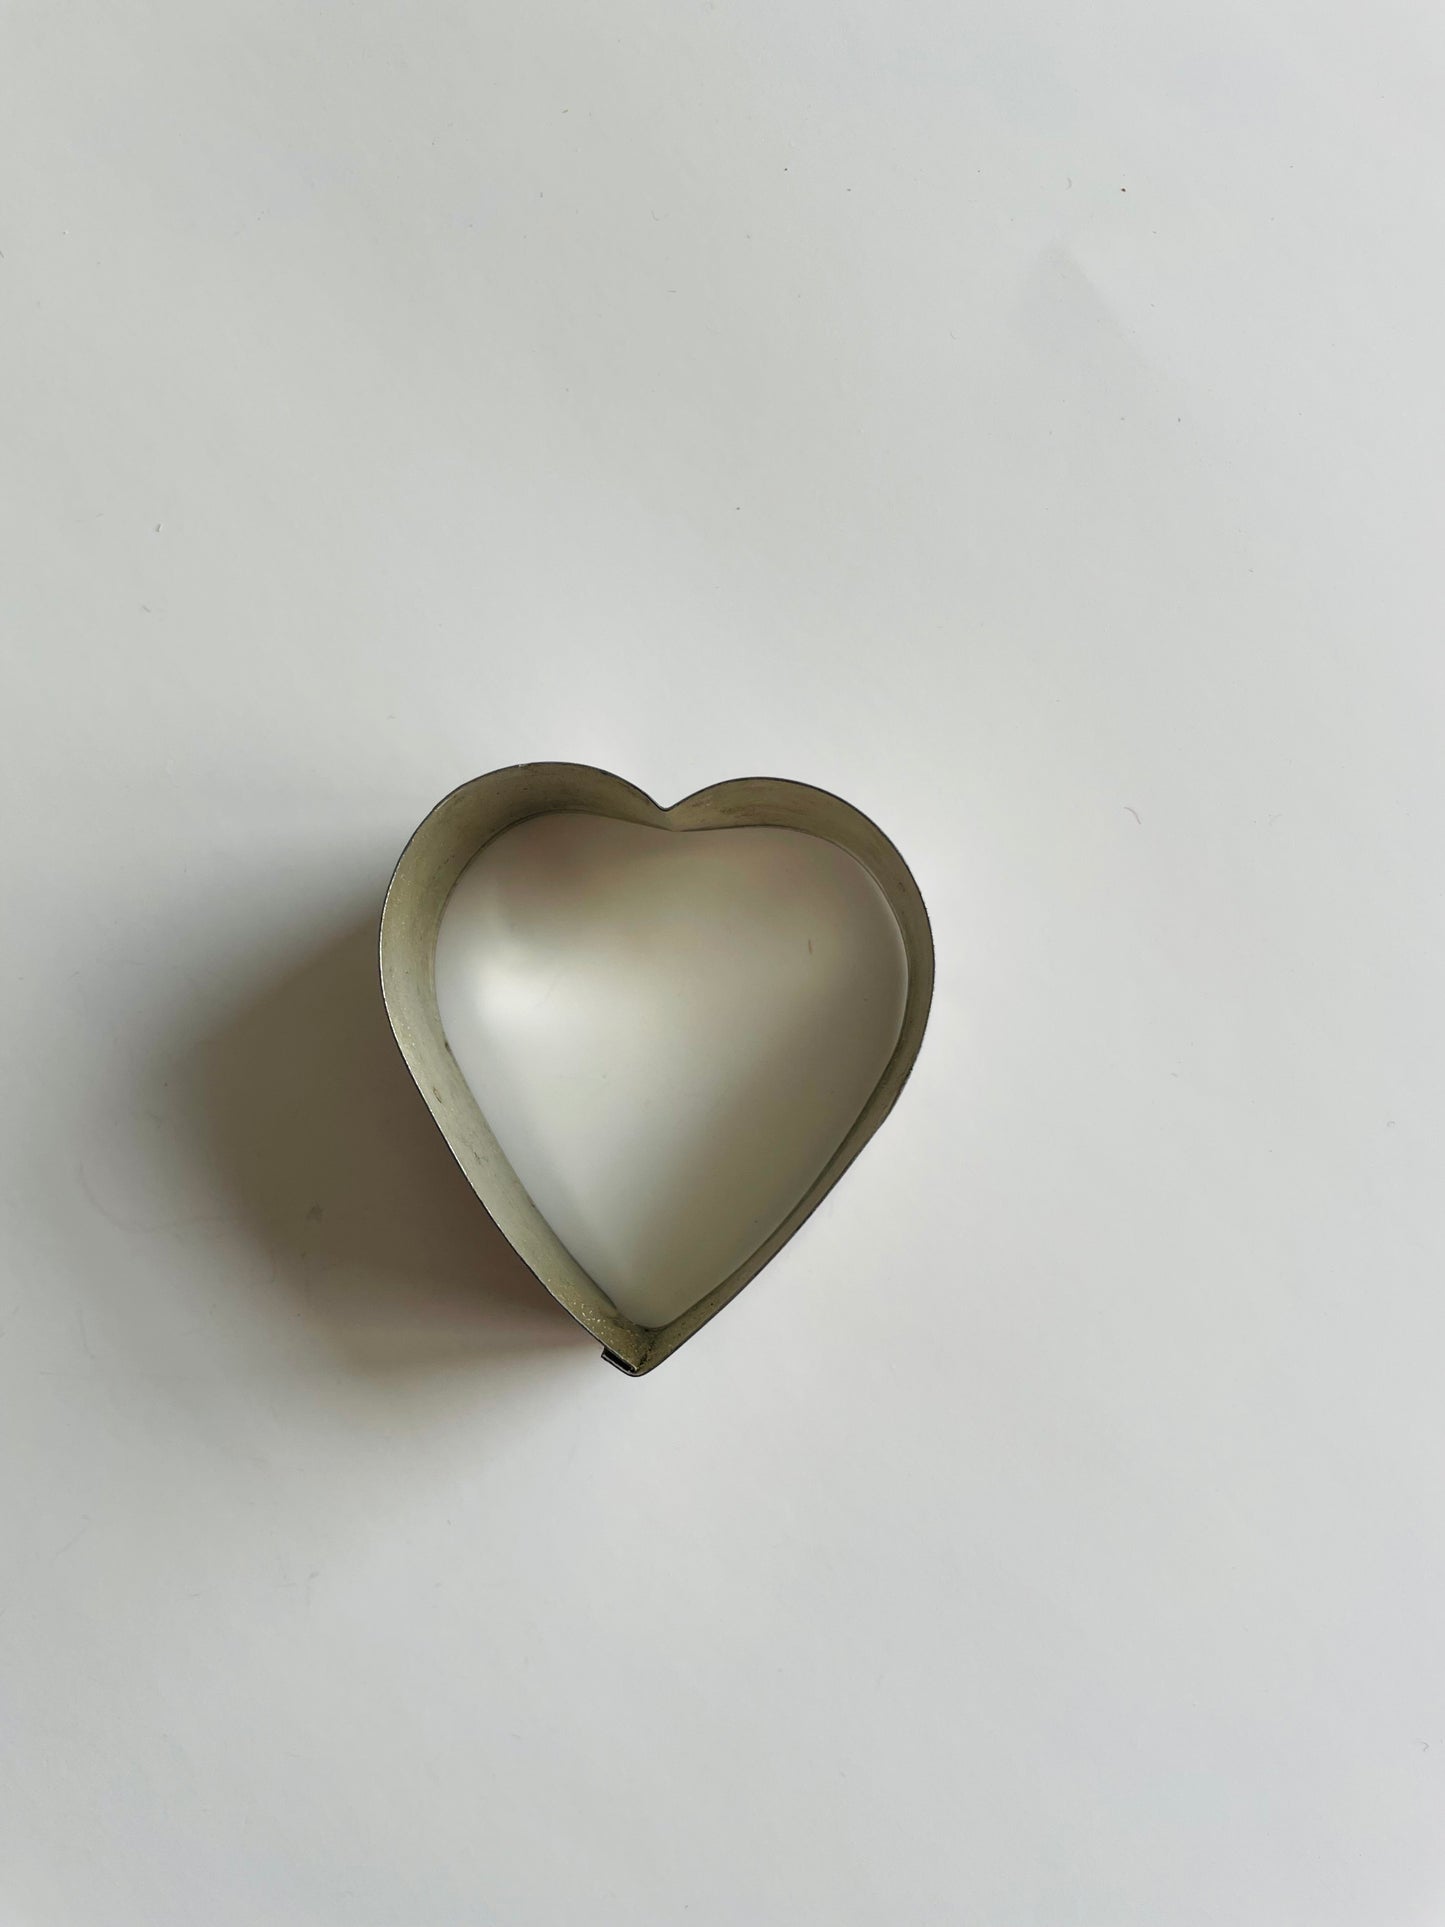 Vintage Cookie Cutter - Heart Shape